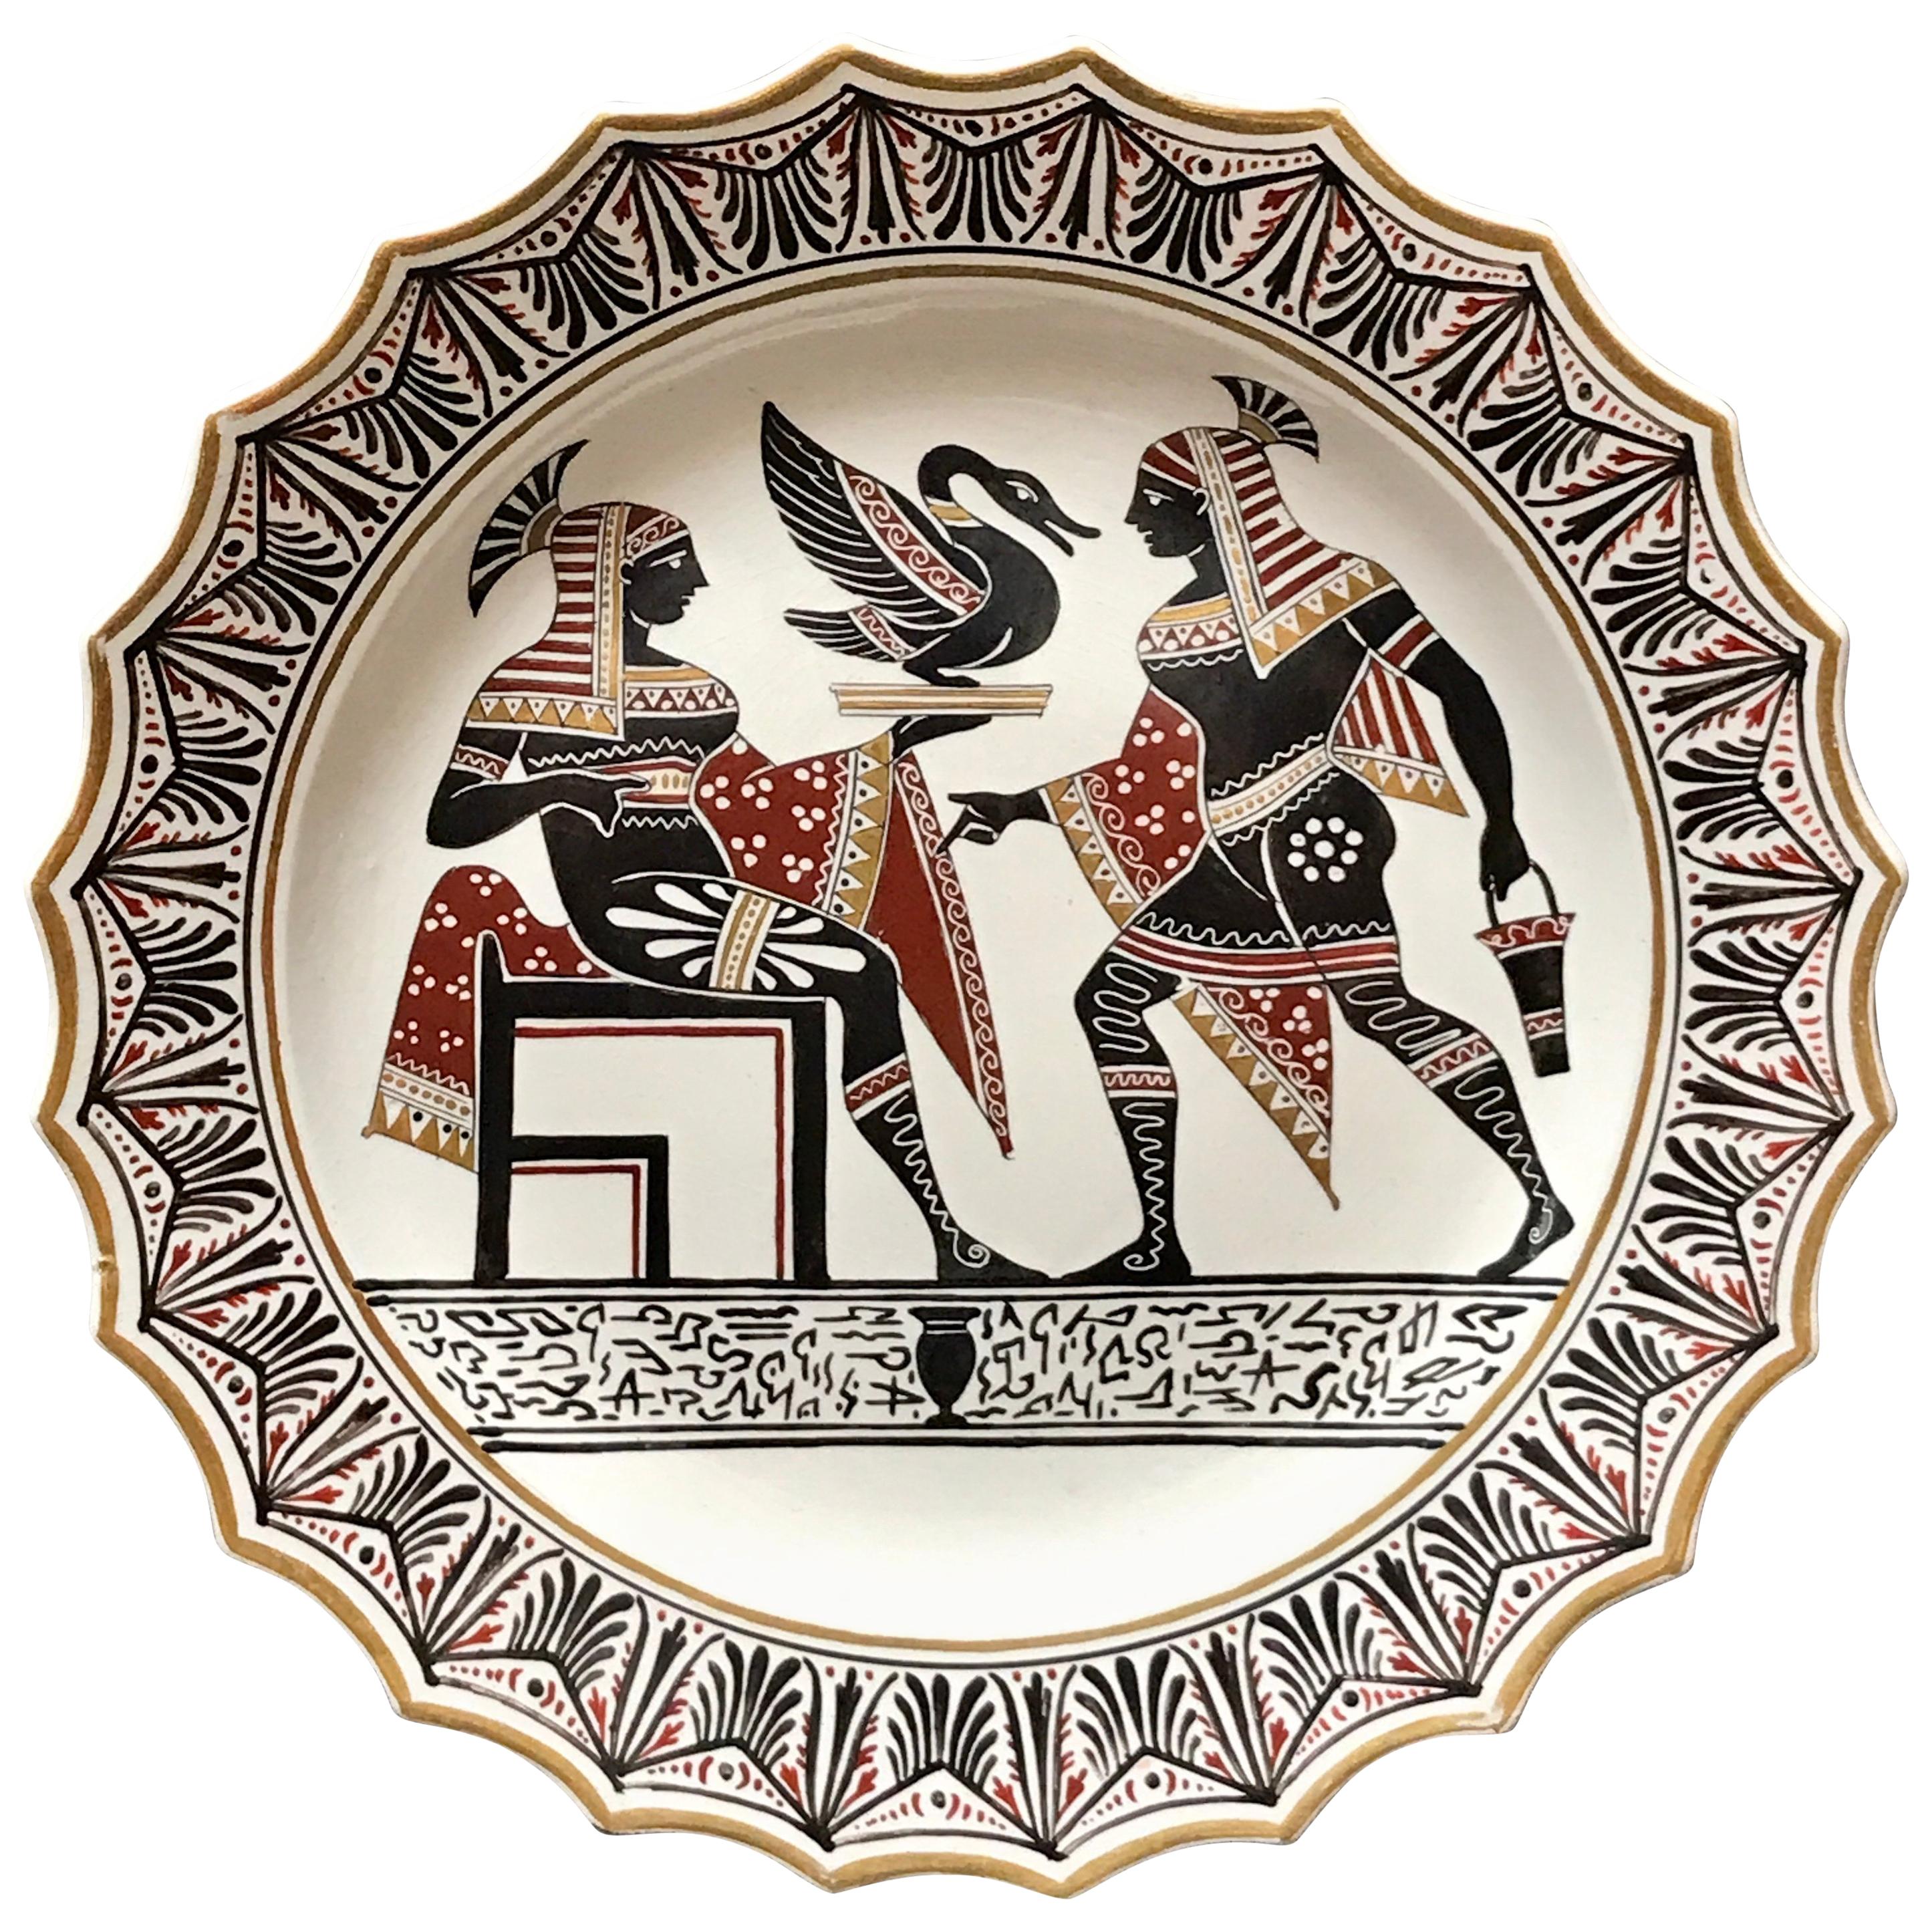 Giustiniani Egyptomania-Keramikteller mit vergoldeten Akzenten, Urne